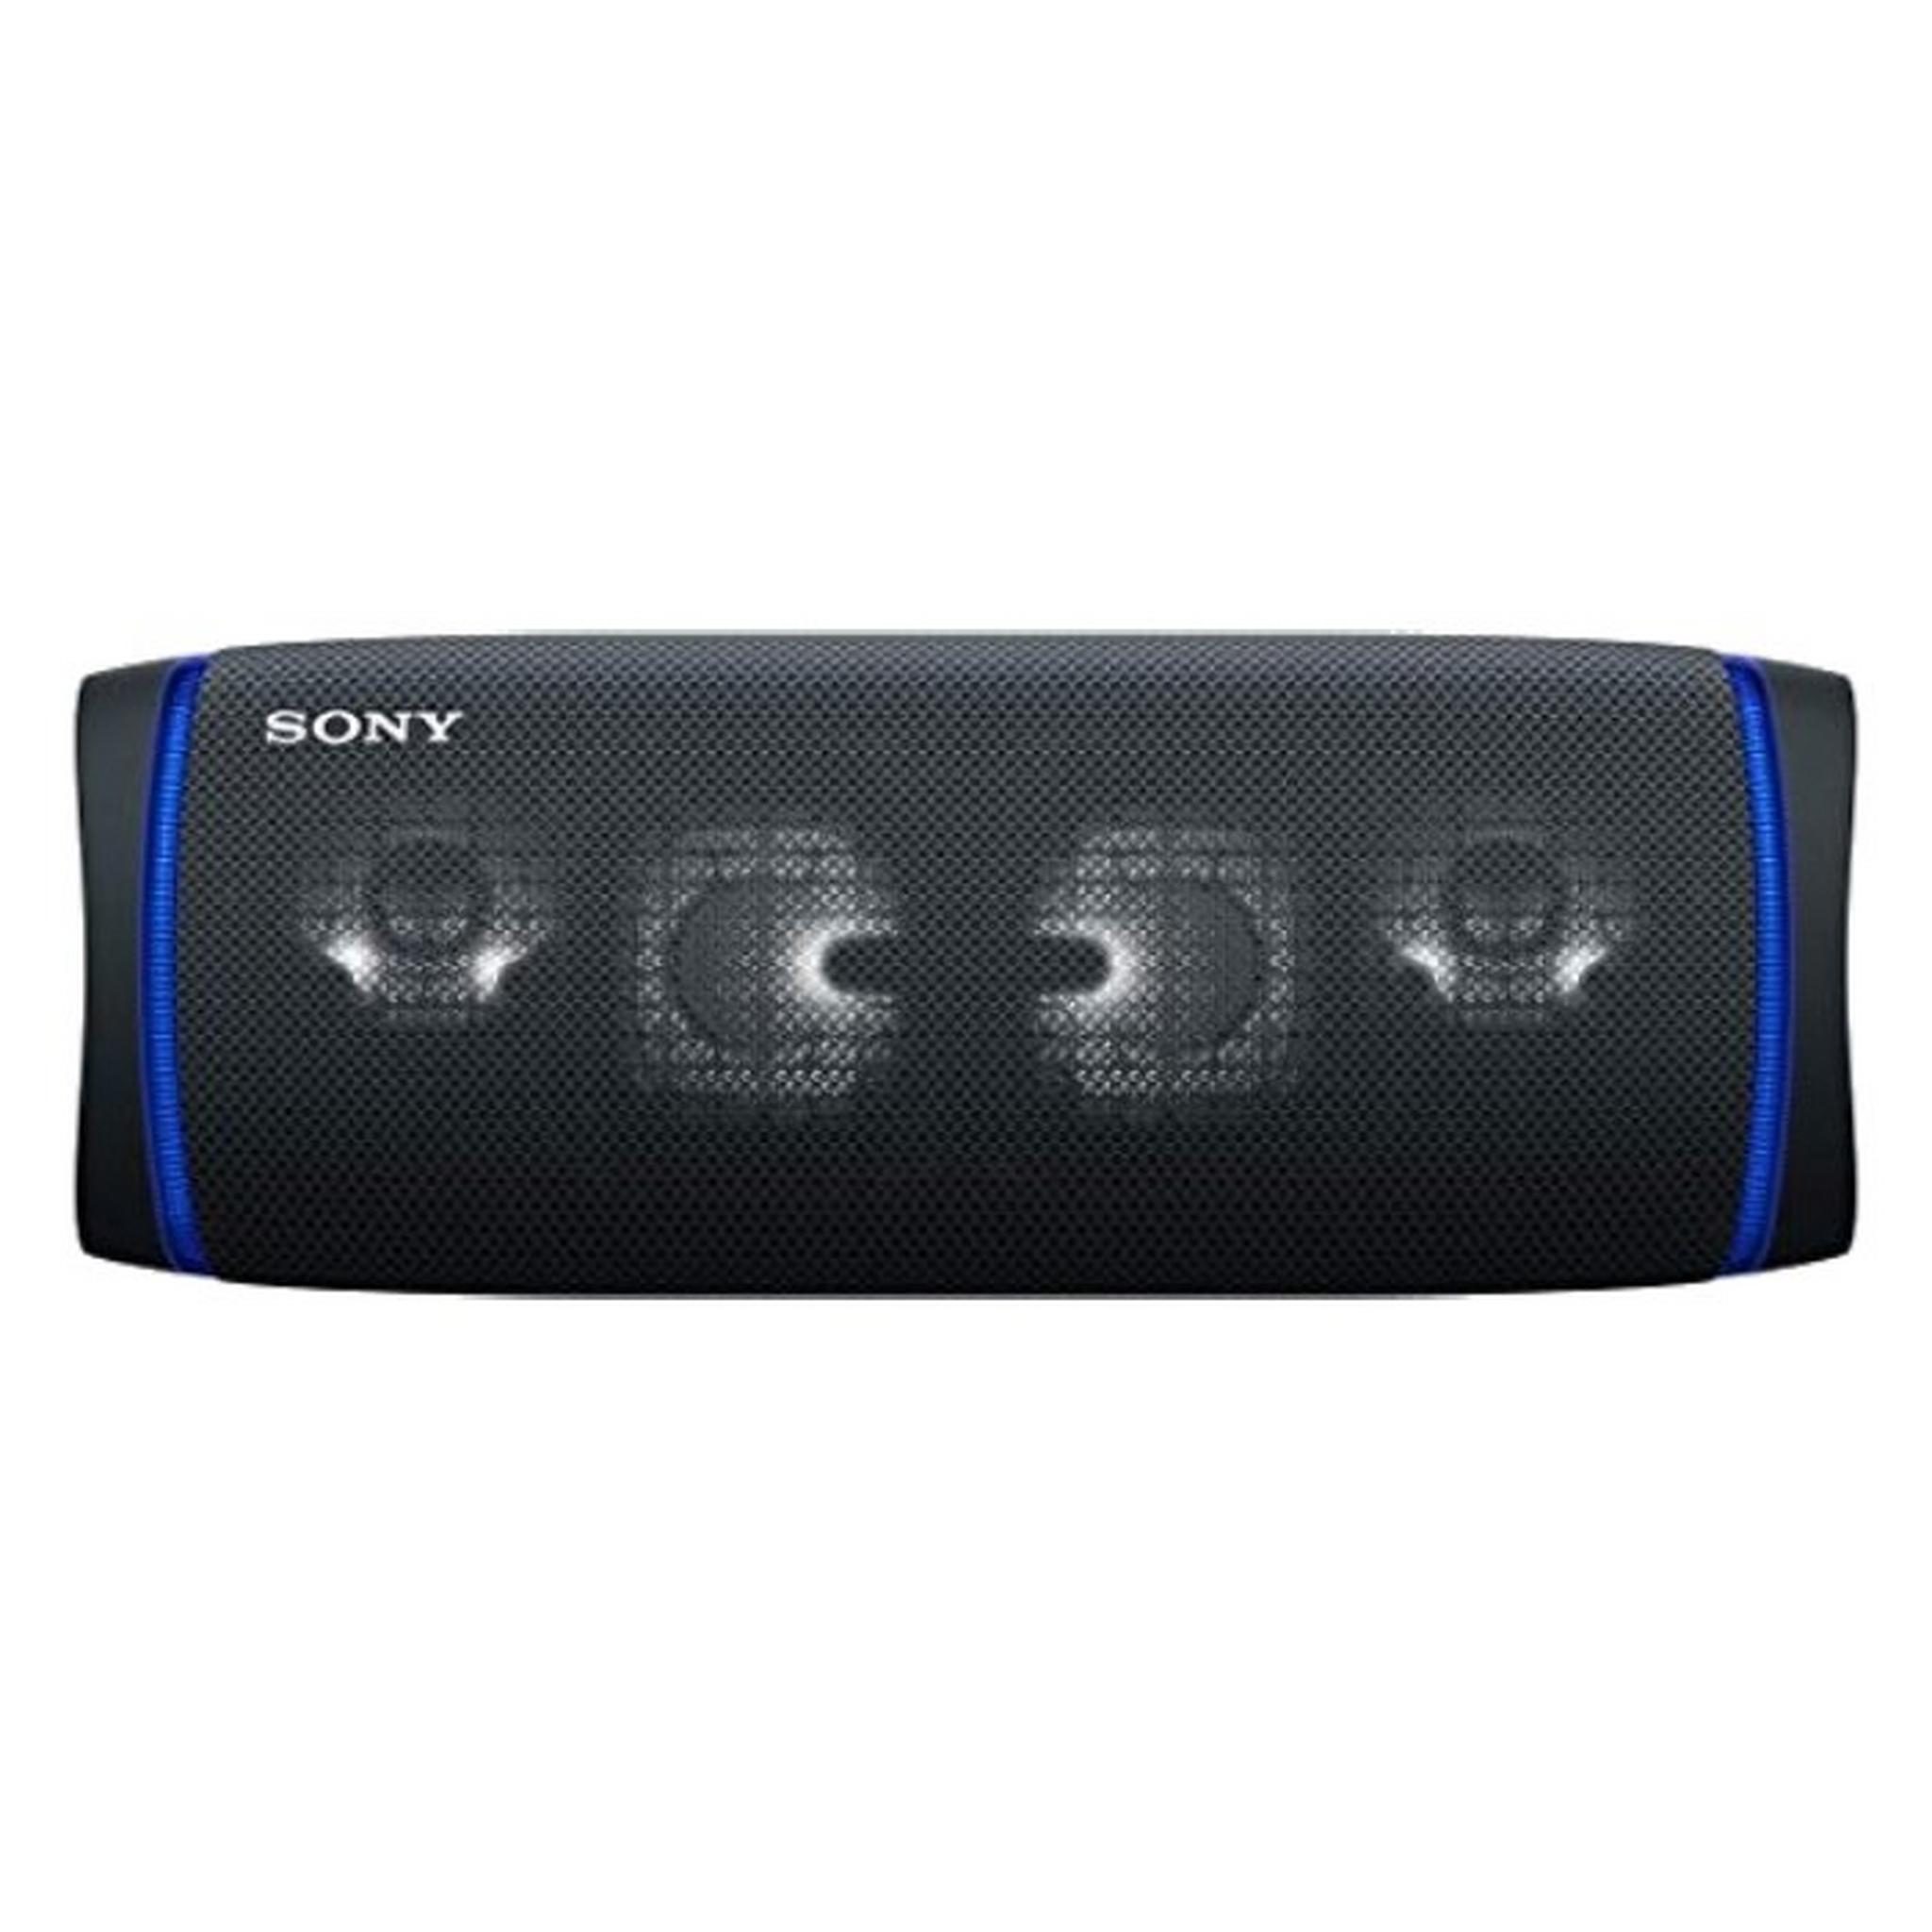 Sony Extra Bass wireless Portable Speaker (SRS-XB43/B) - Black